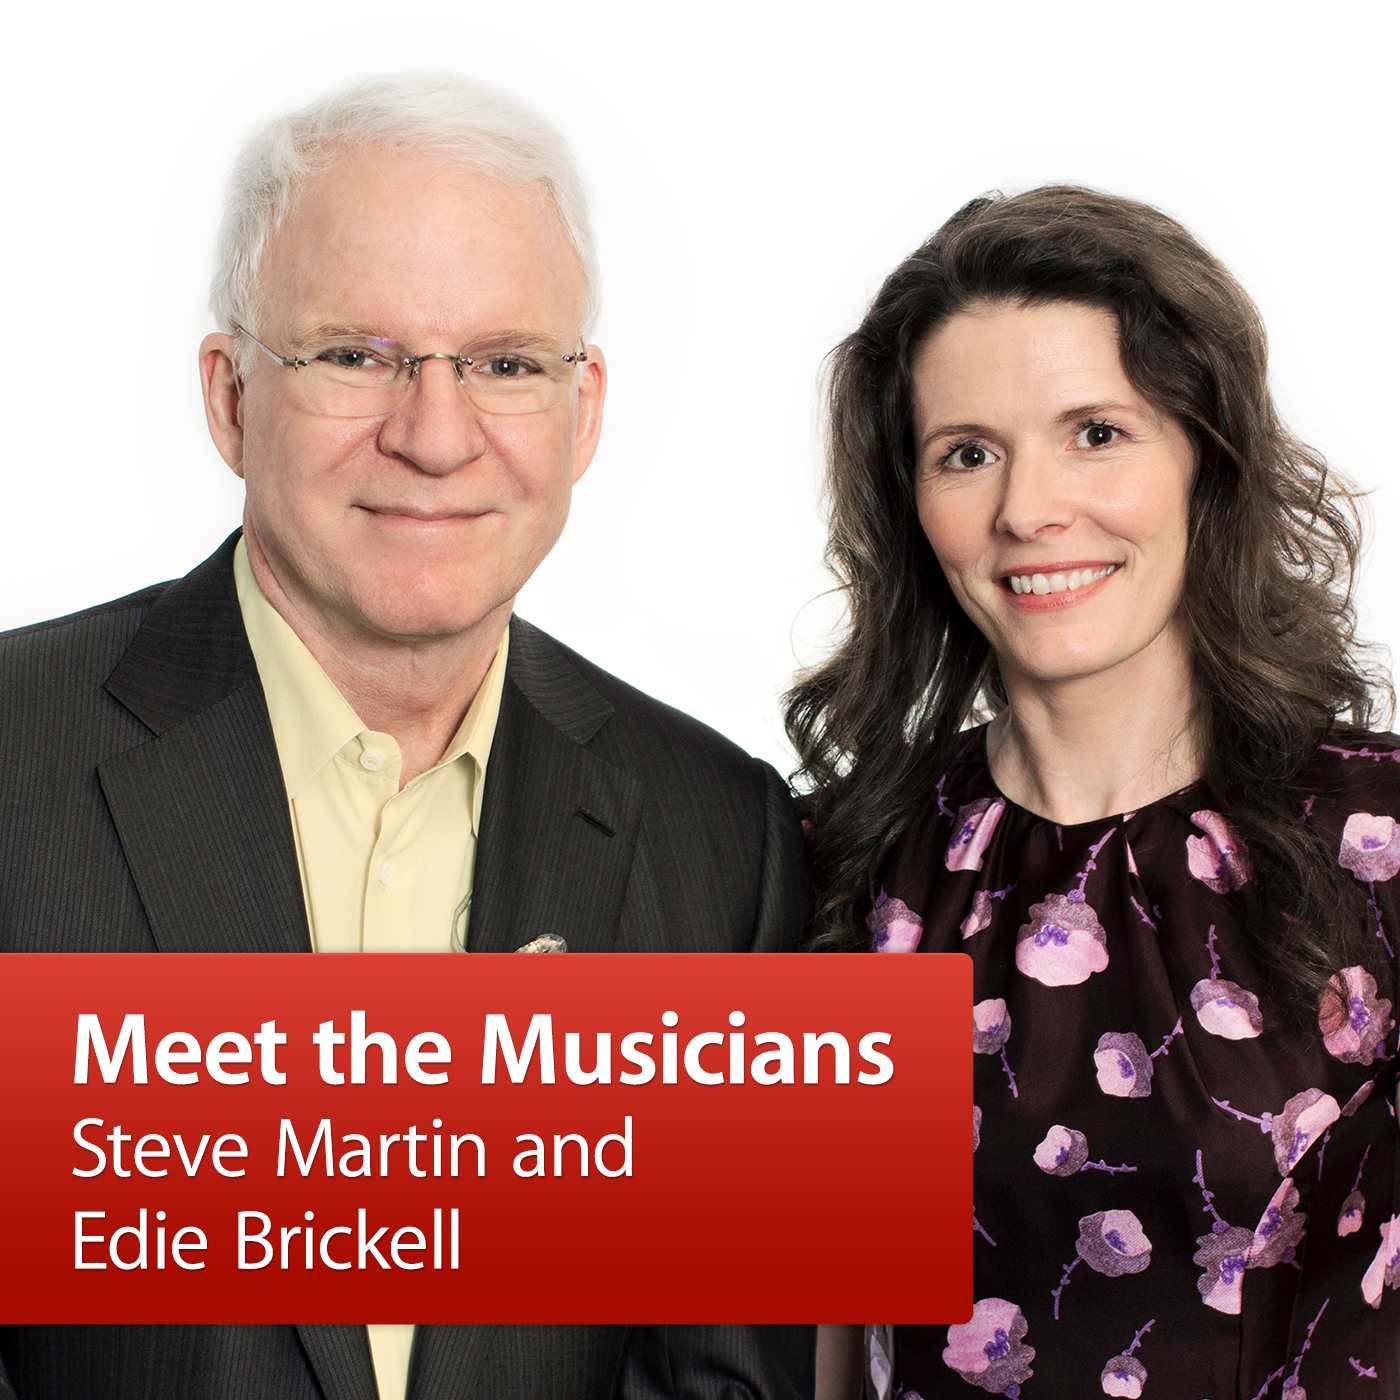 Steve Martin and Edie Brickell: Meet the Musicians